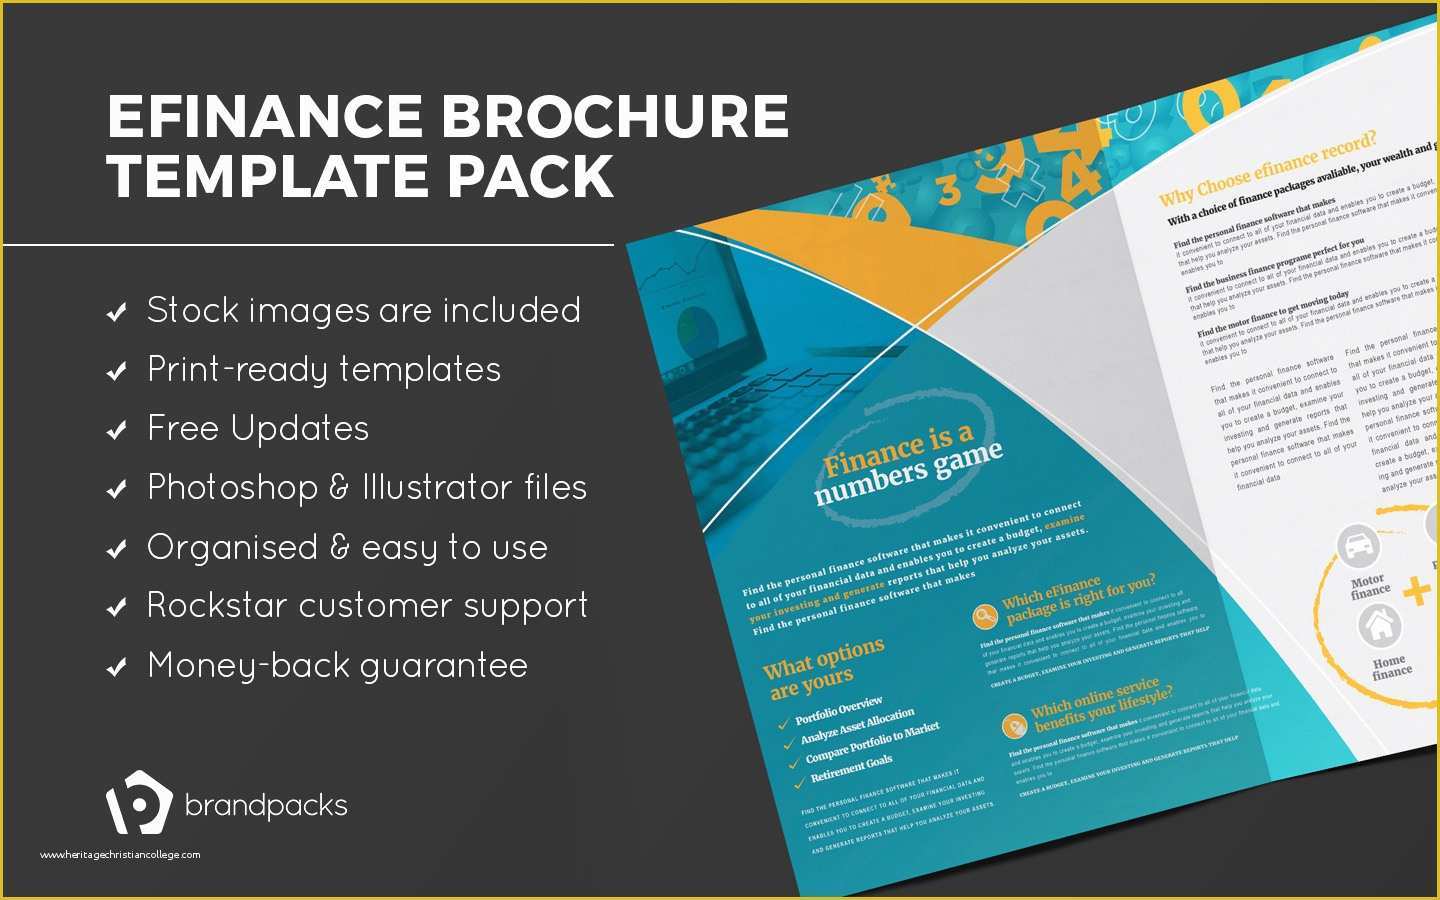 Free E Brochure Design Templates Of Efinance Brochure Template Pack Brandpacks